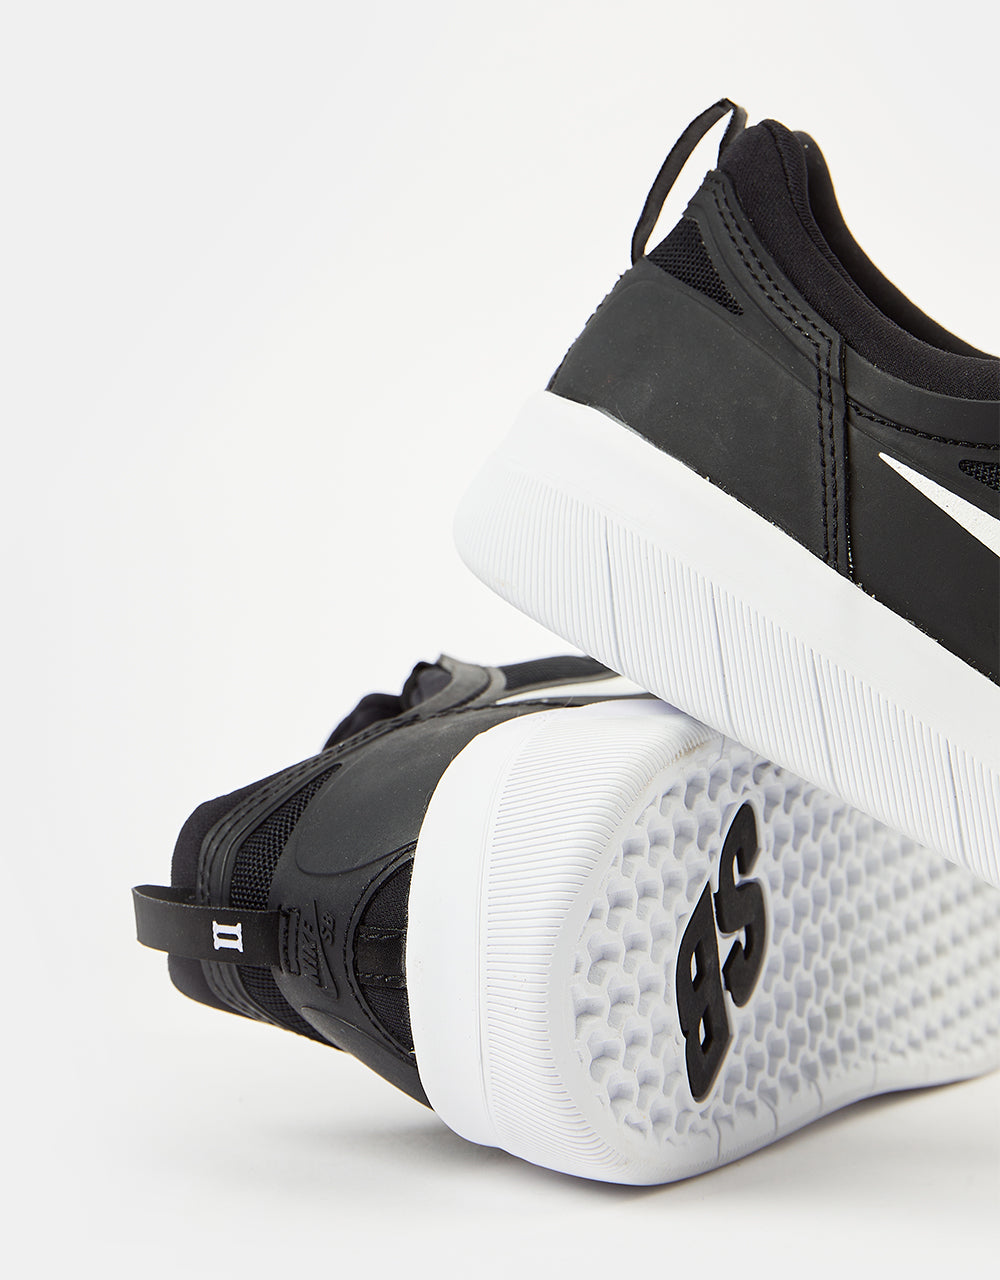 Nike SB Nyjah Free 2 Skate Shoes - Black/White-Black-Black